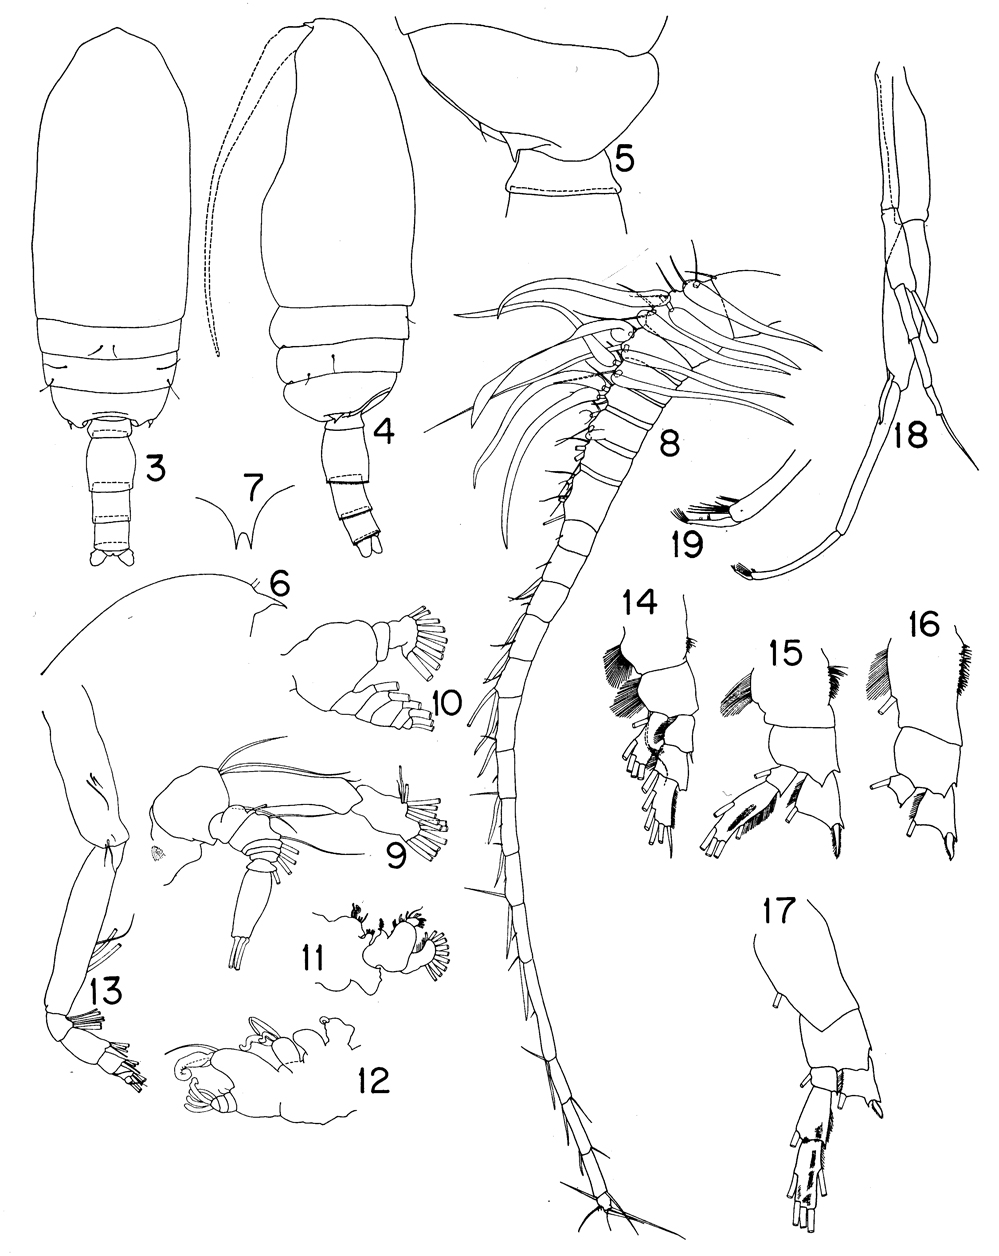 Species Pseudotharybis magnus - Plate 1 of morphological figures